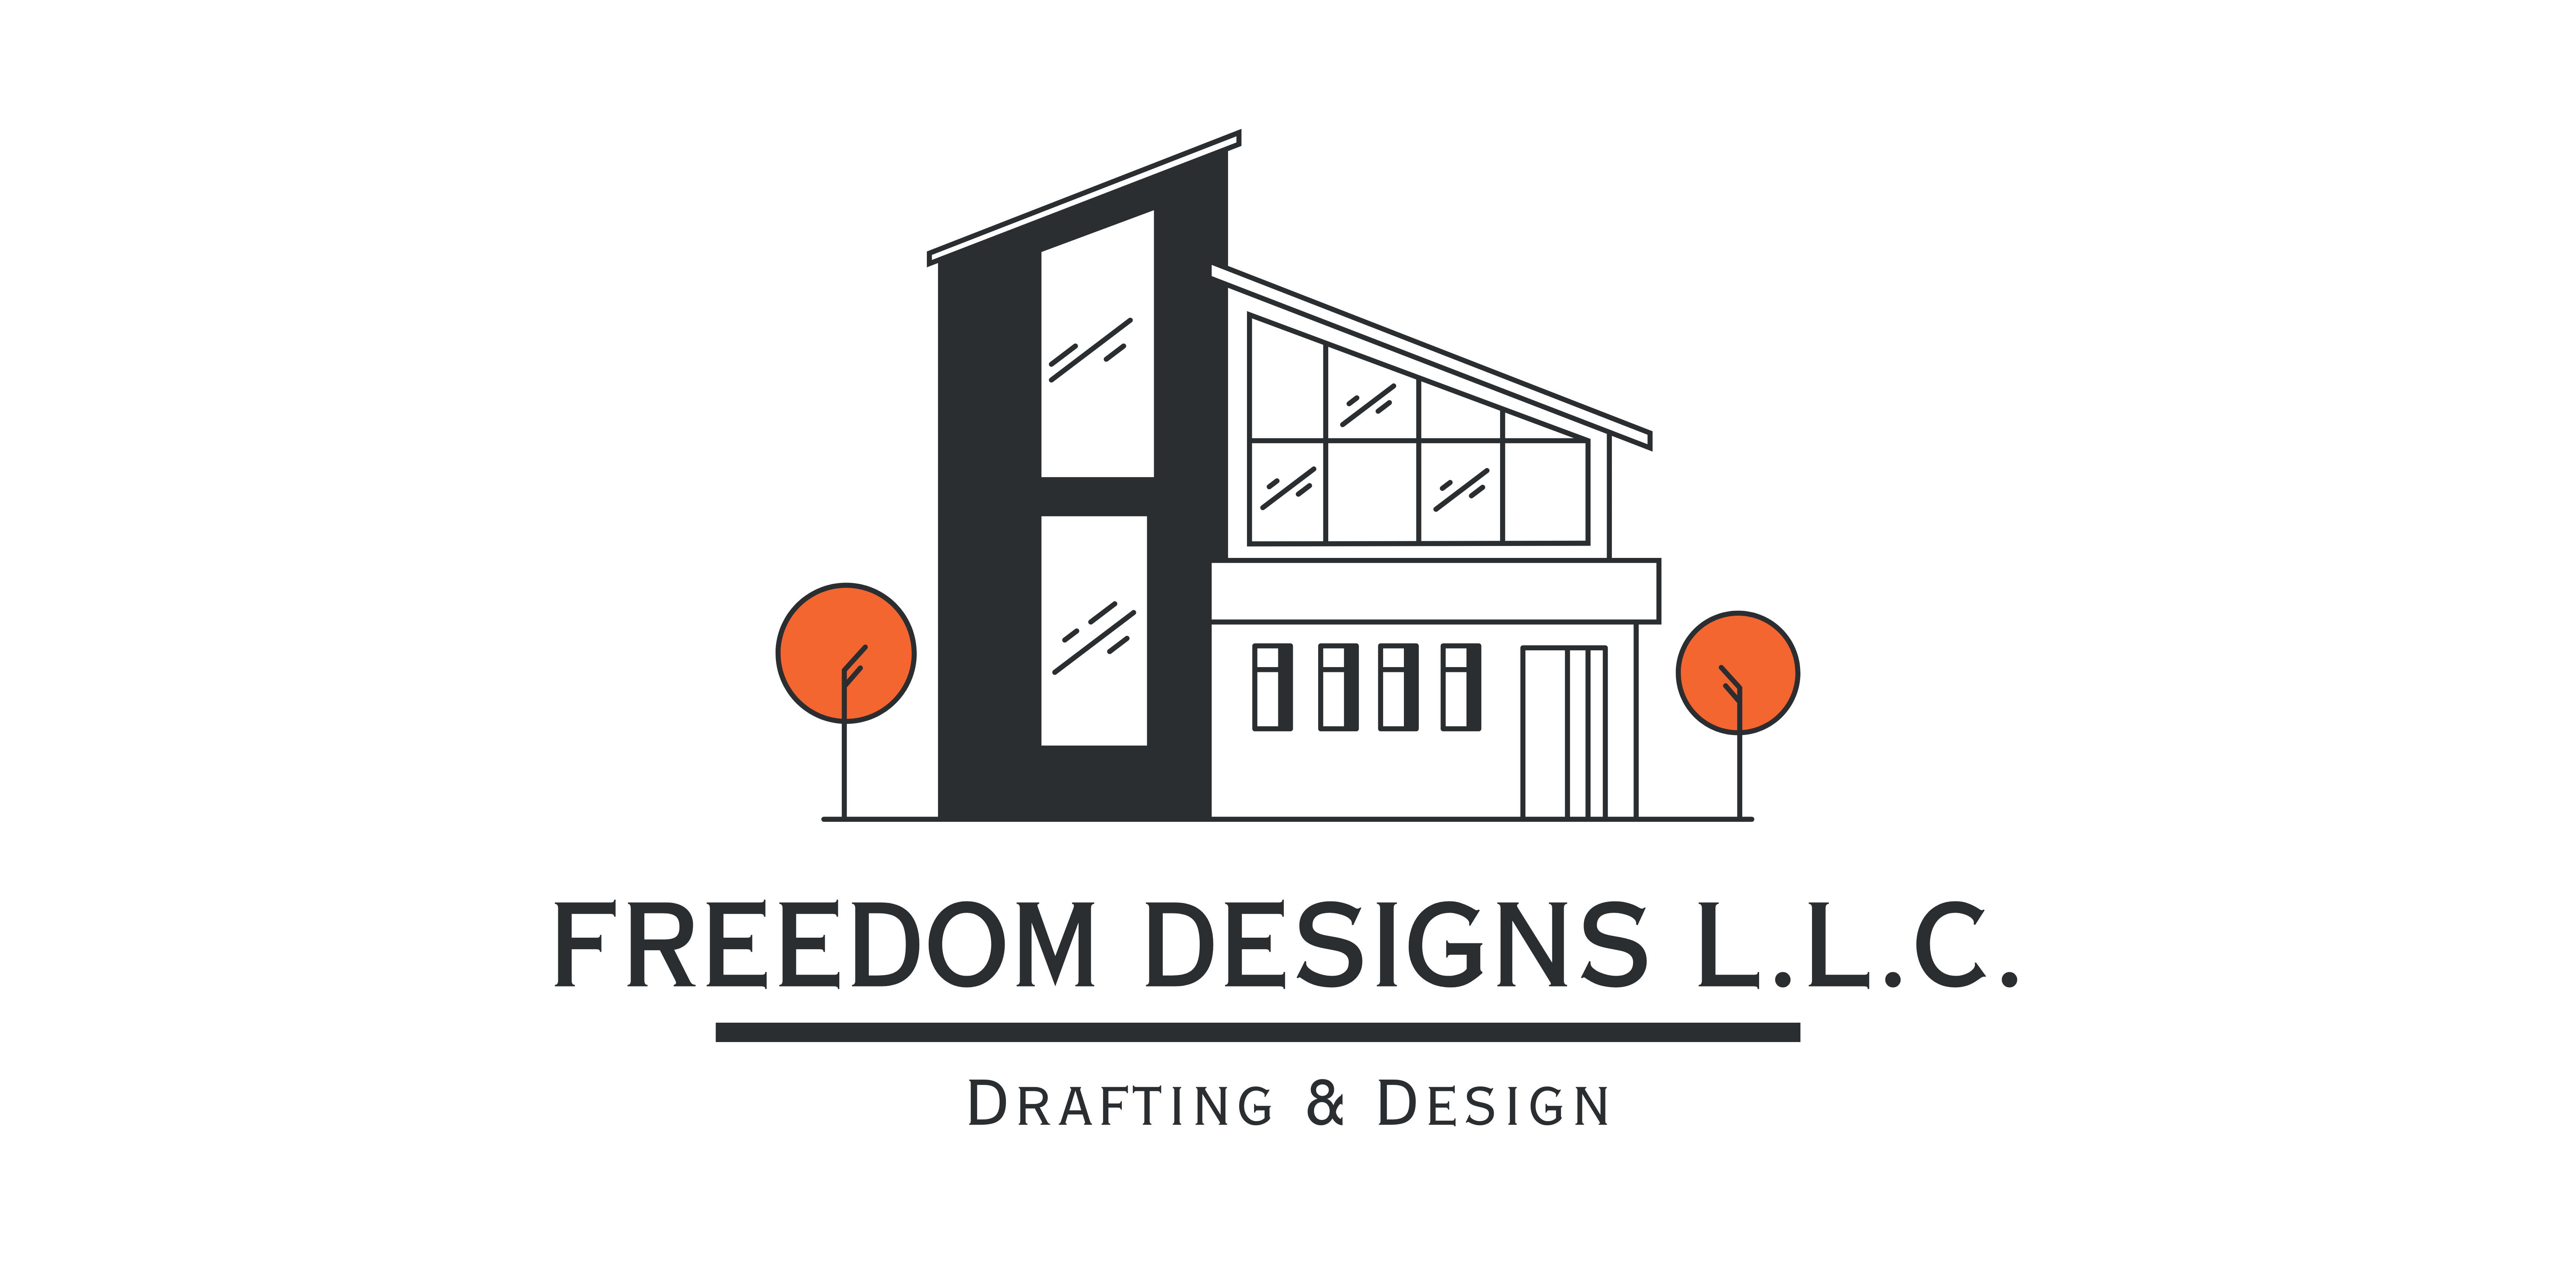 Freedom Designs draftsman Logo